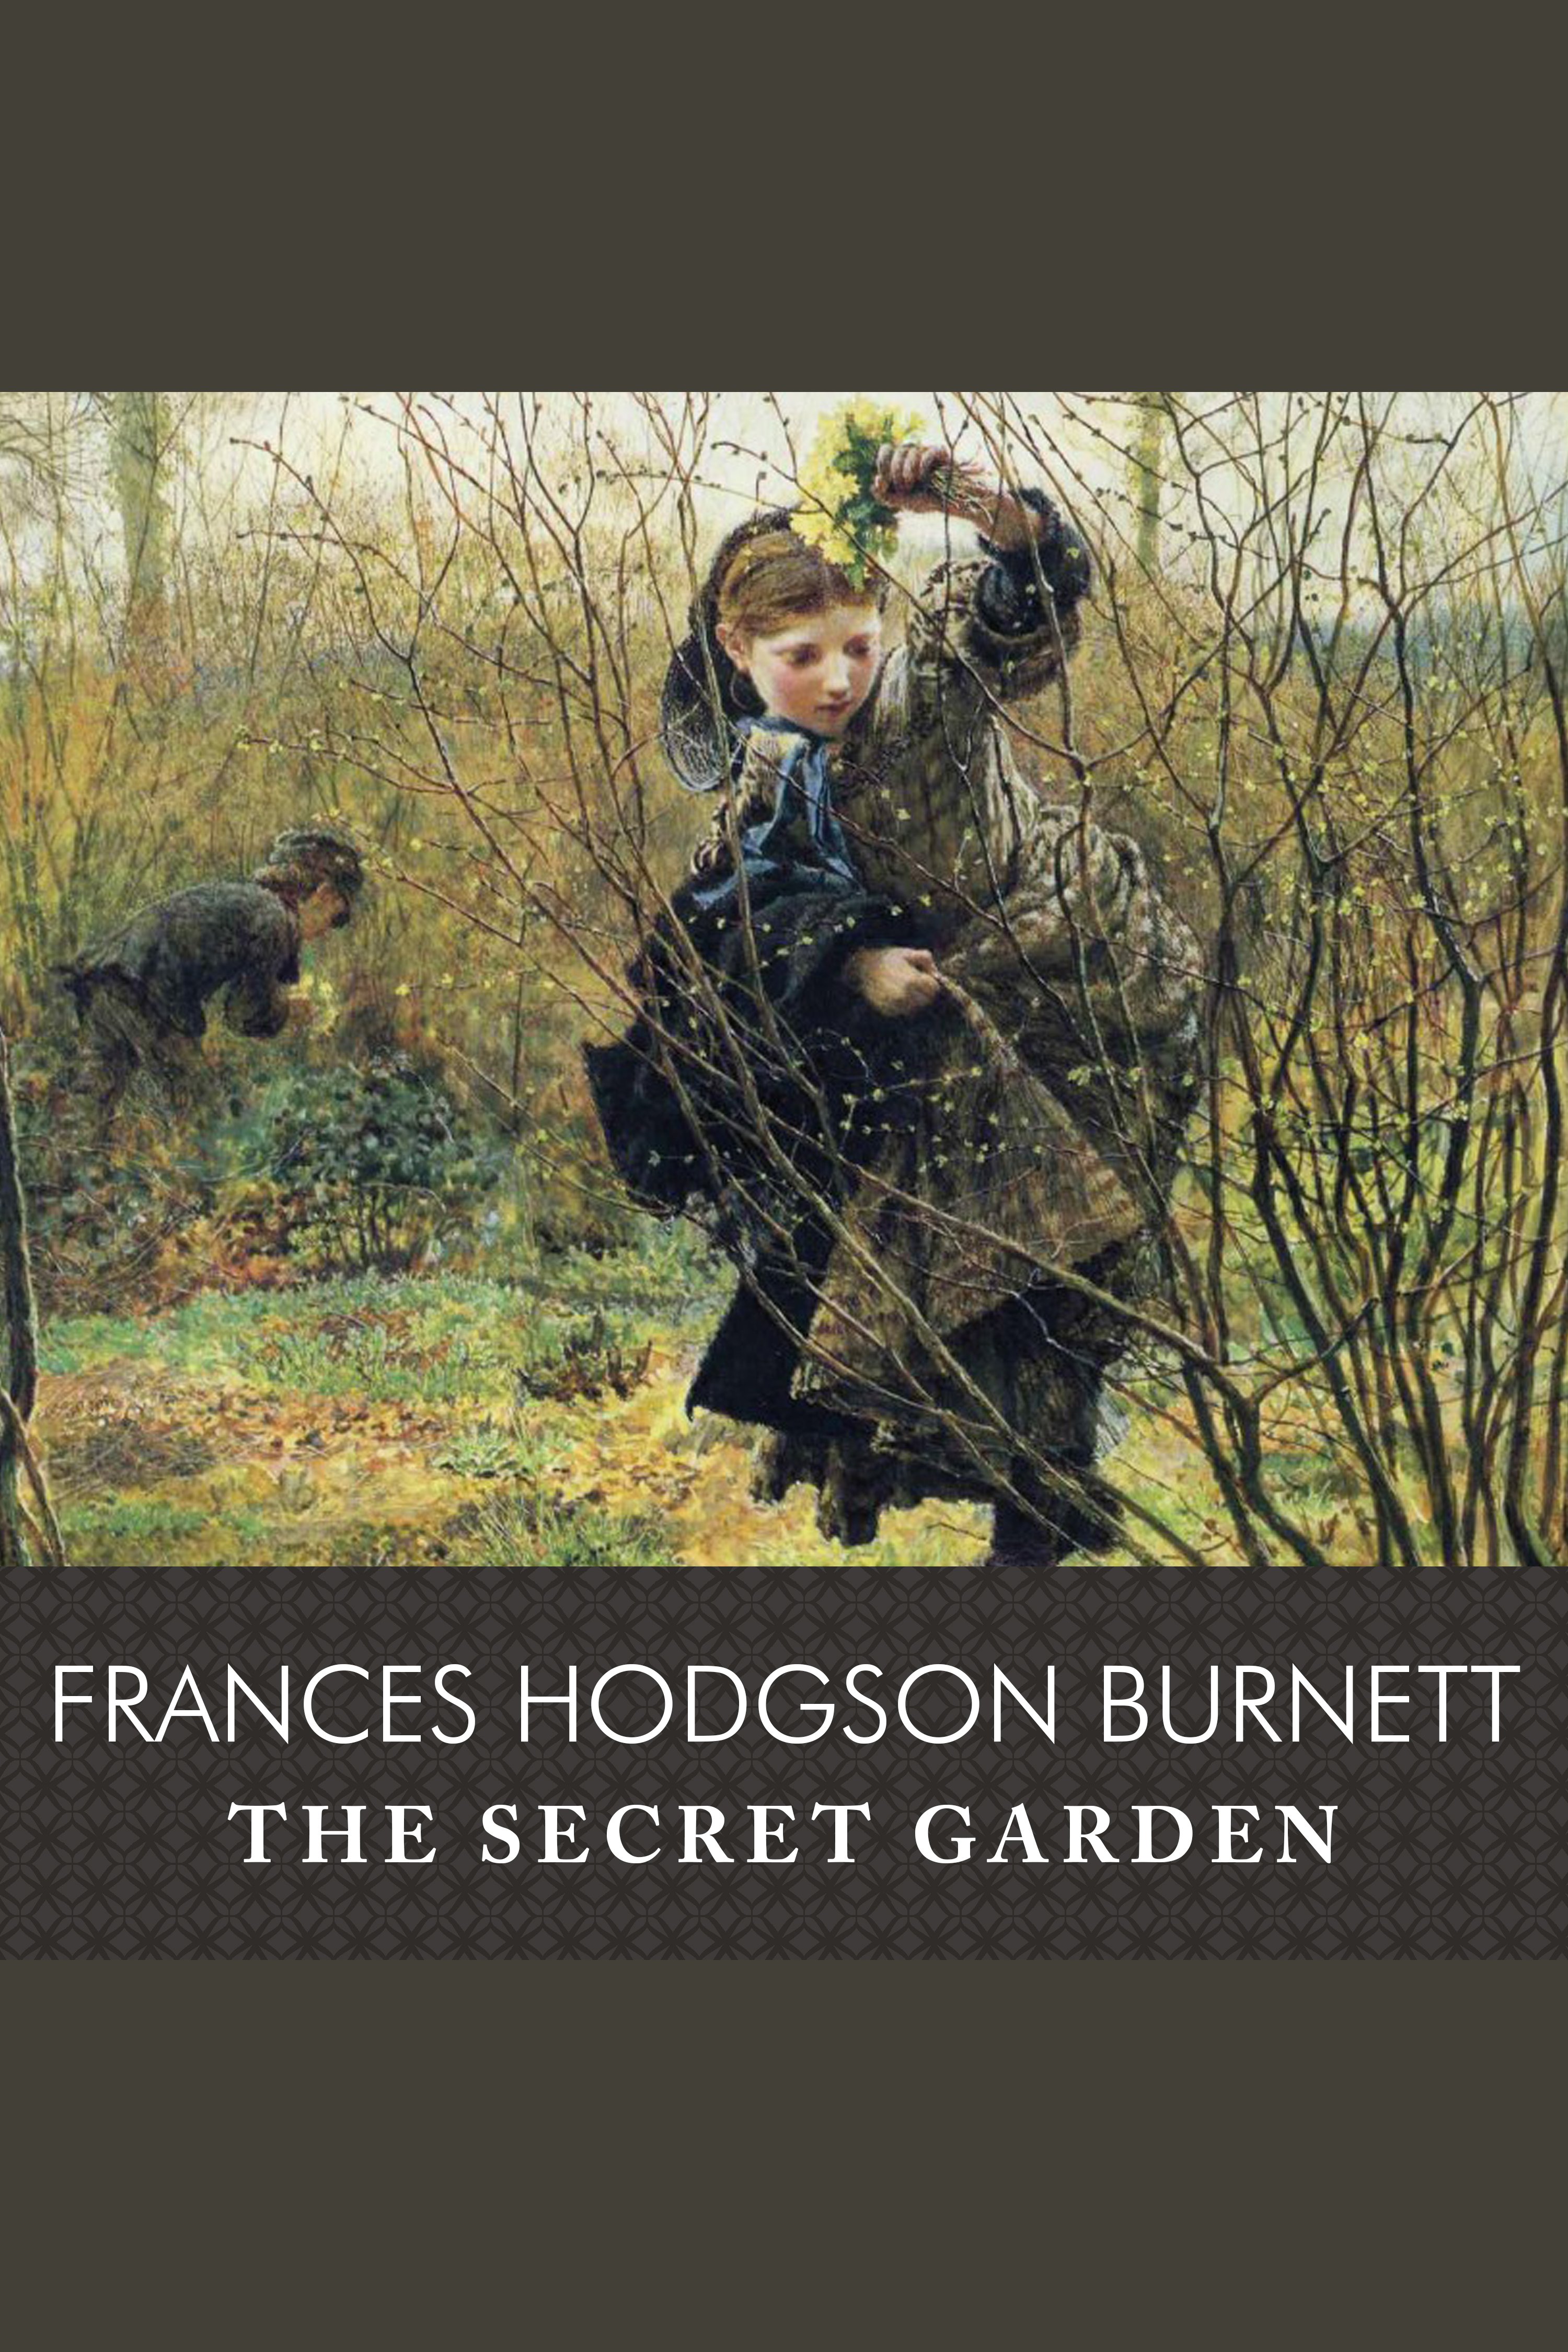 The secret garden cover image